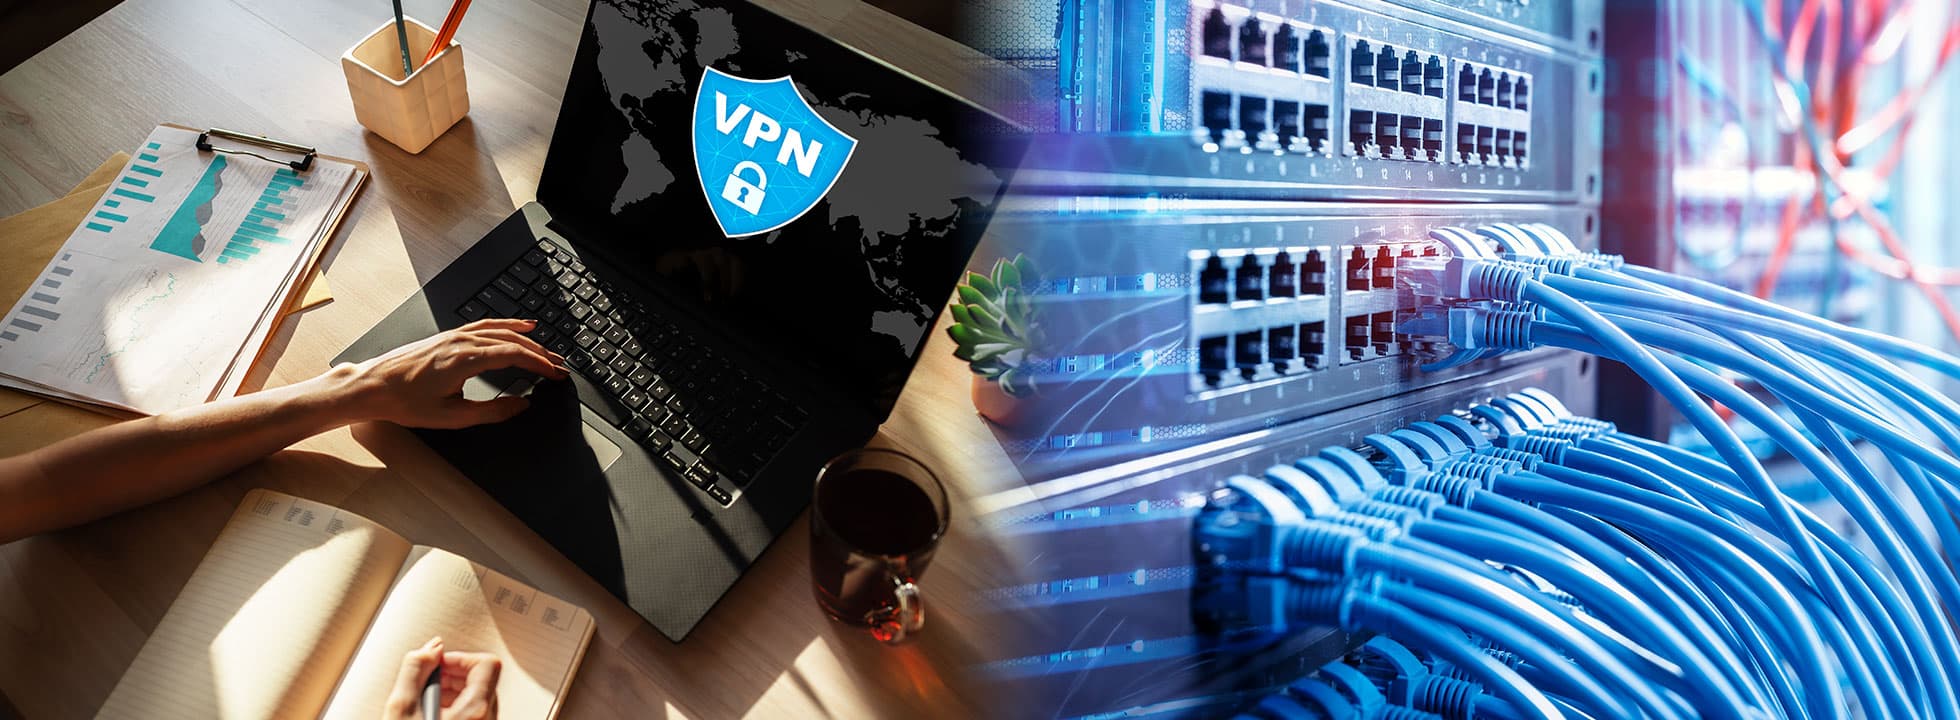 VPN接続とネットワーク機器